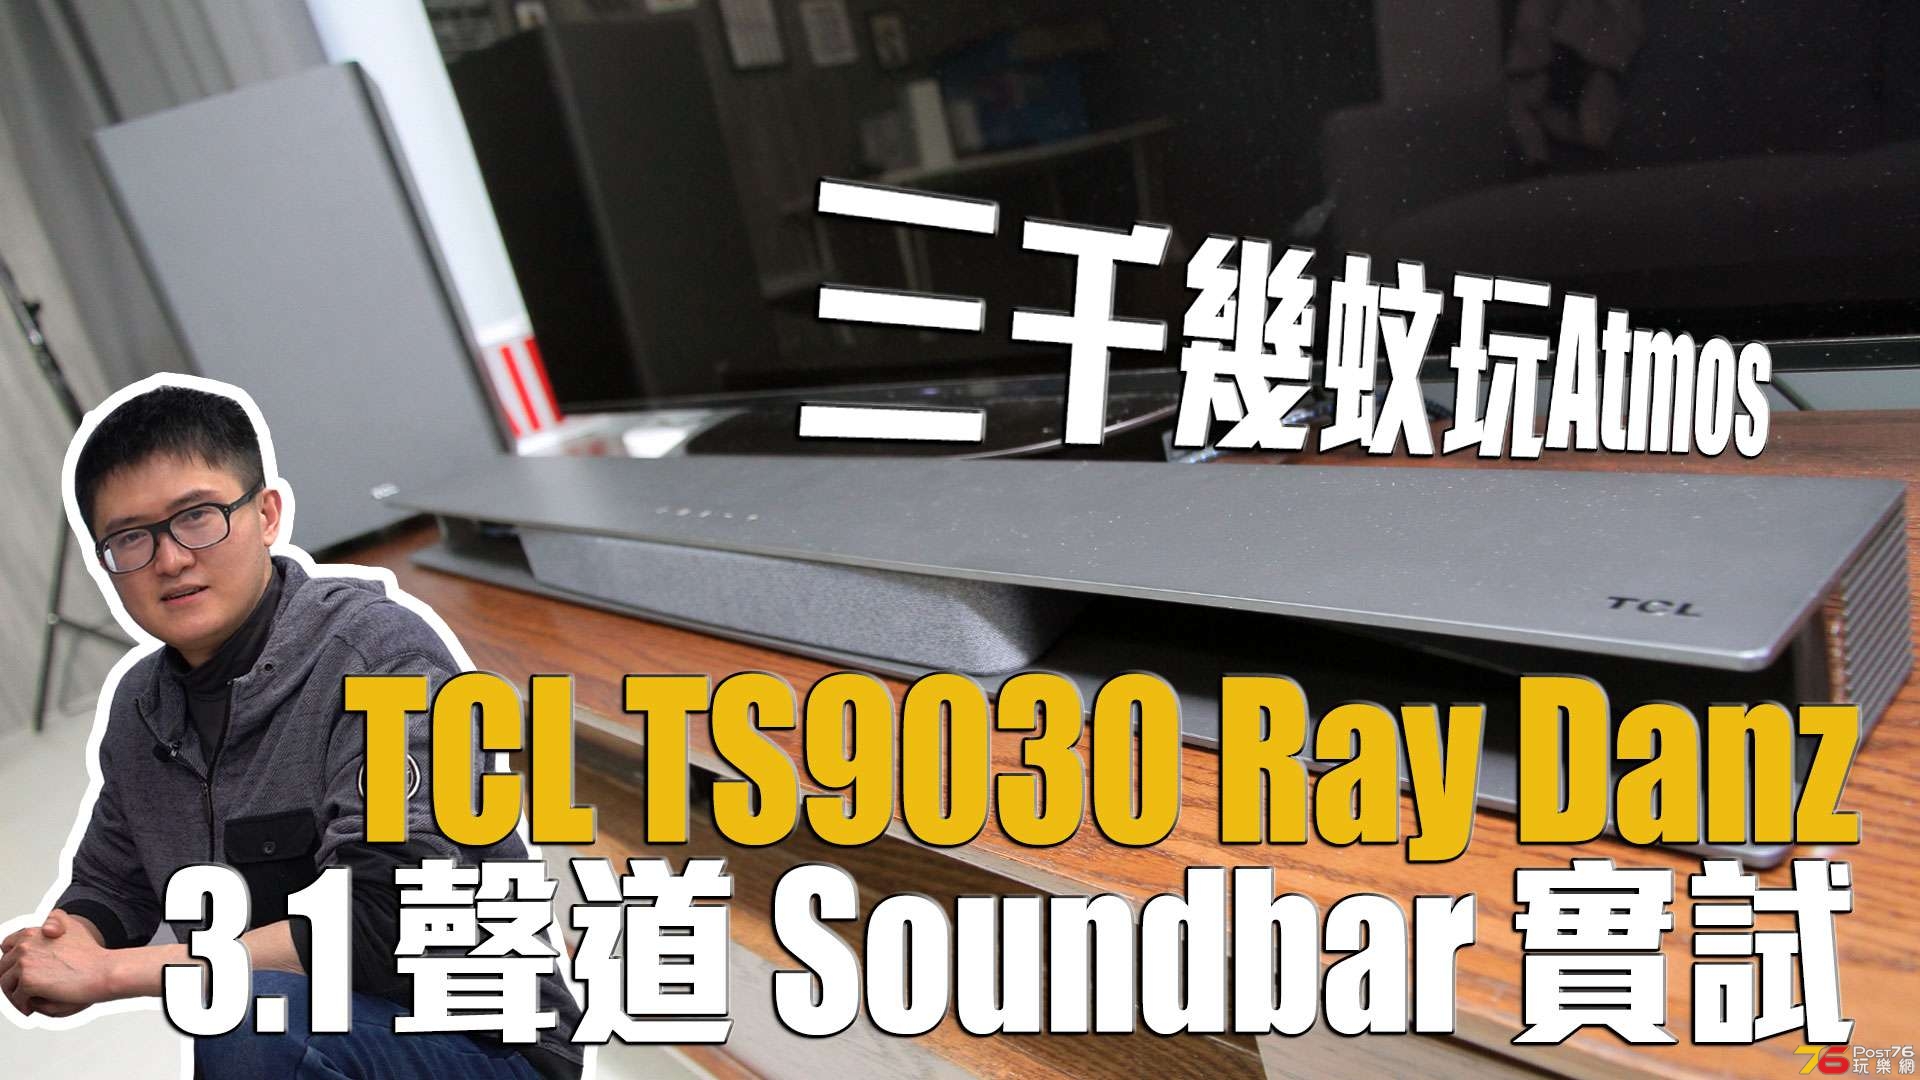 TCL_Soundbar_index_forum.jpg